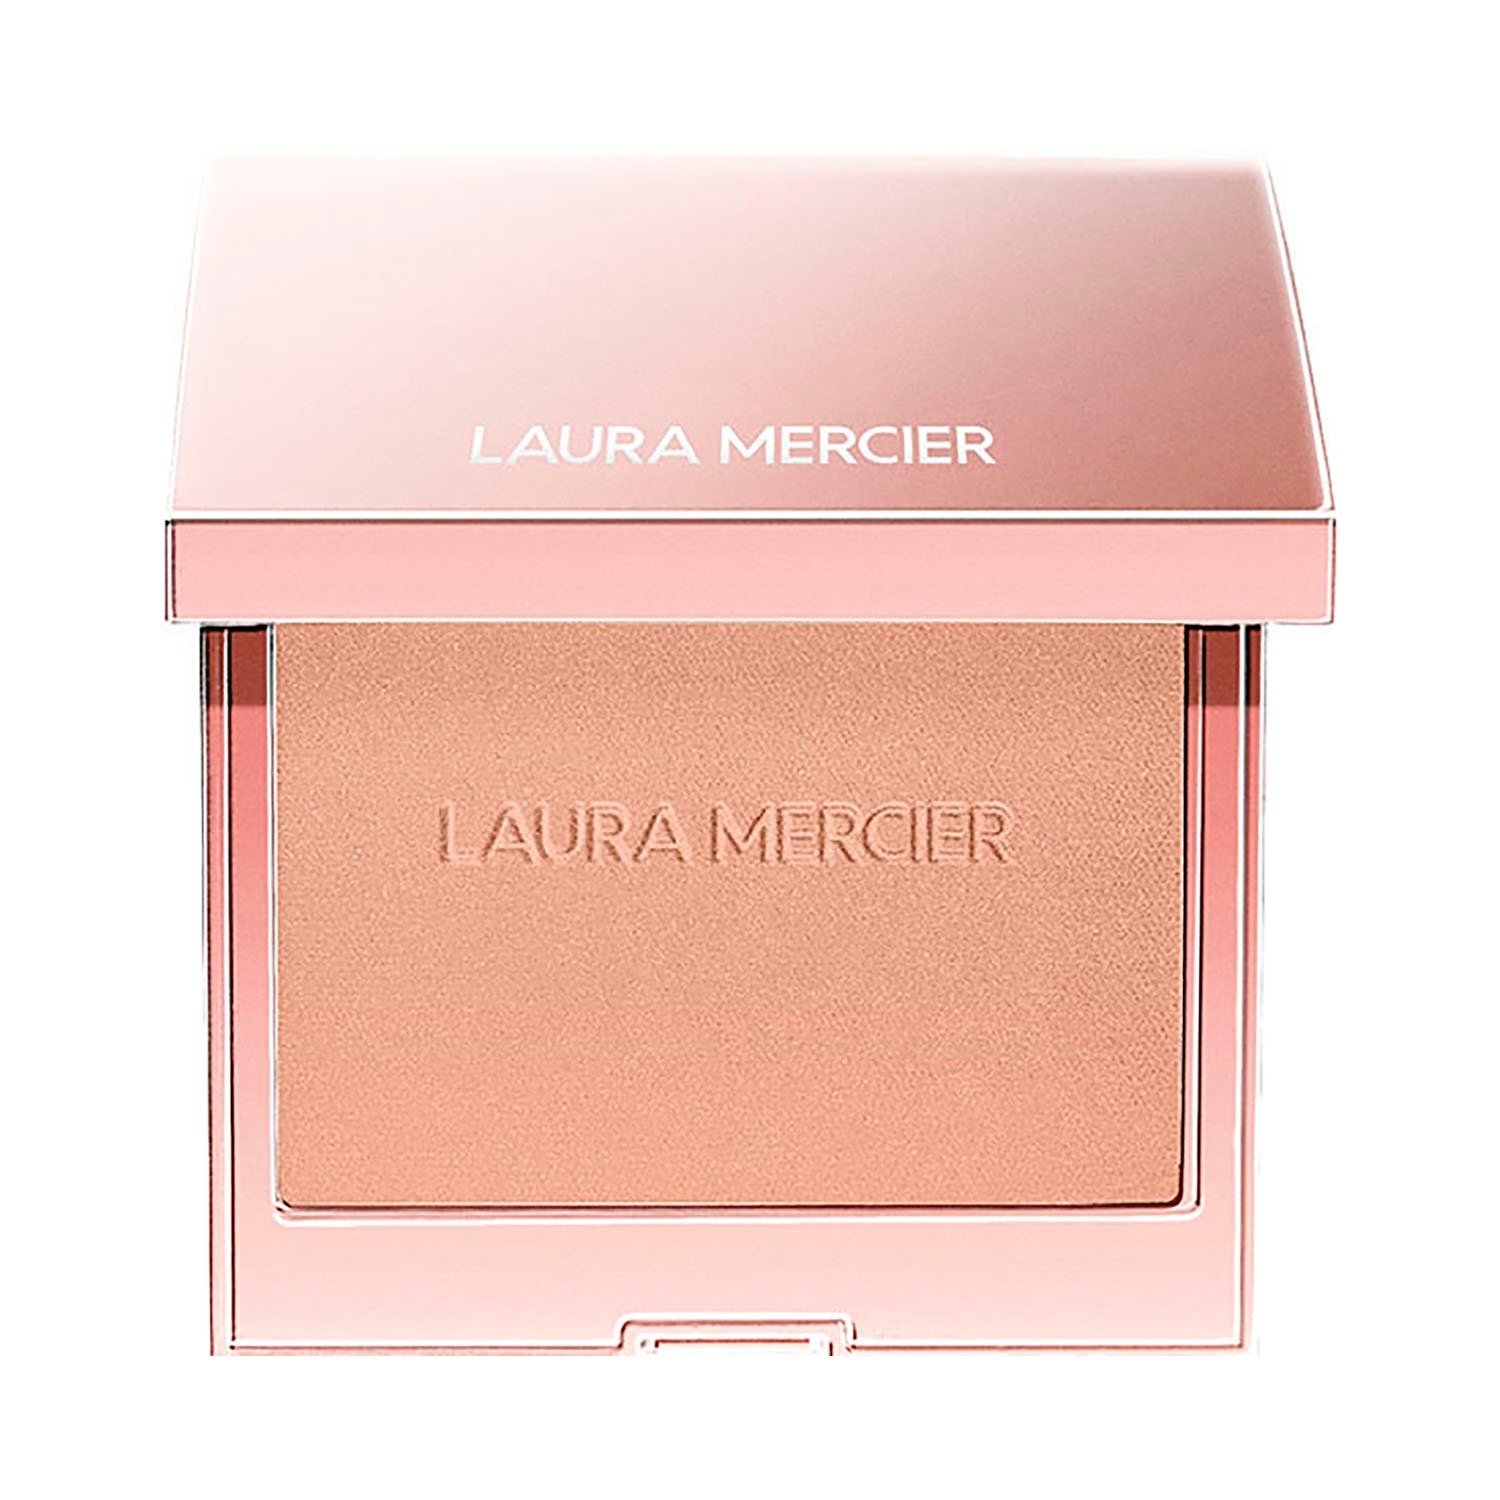 Laura Mercier | Laura Mercier Rose Glow Blush Color Infusion - Peach Shimmer (6g)